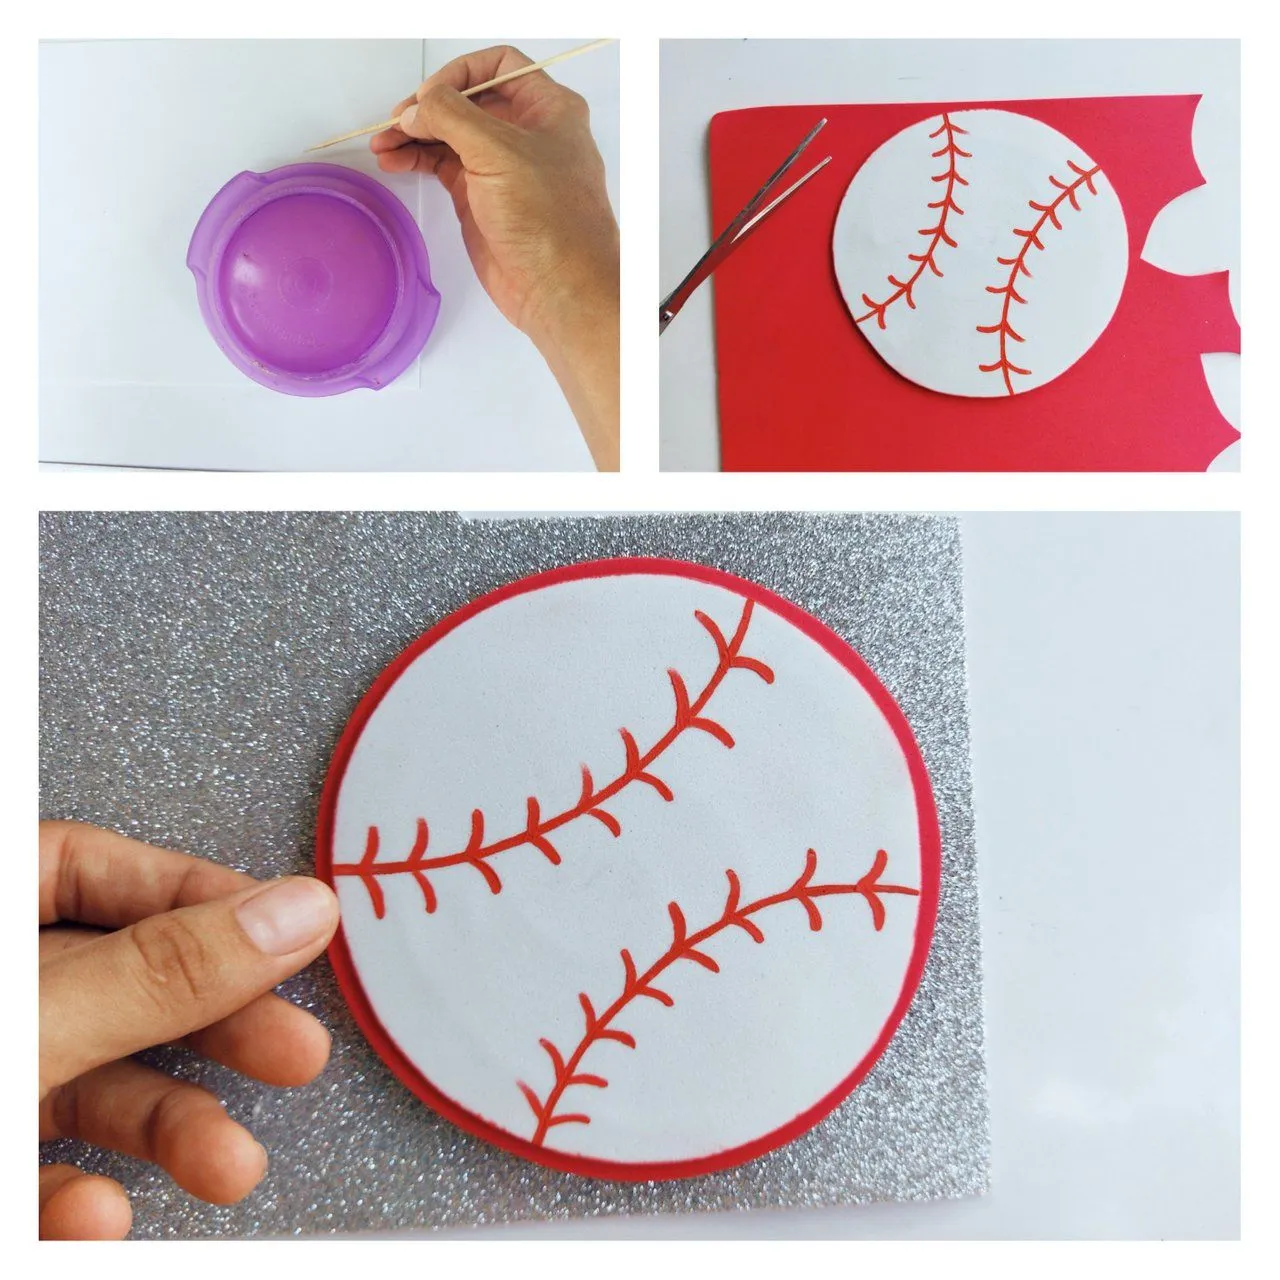 ESP-ING] ⚾ Haciendo un Topper con motivo de béisbol. ⚾|| ⚾ Making a Topper  with a baseball motif. ⚾ | PeakD